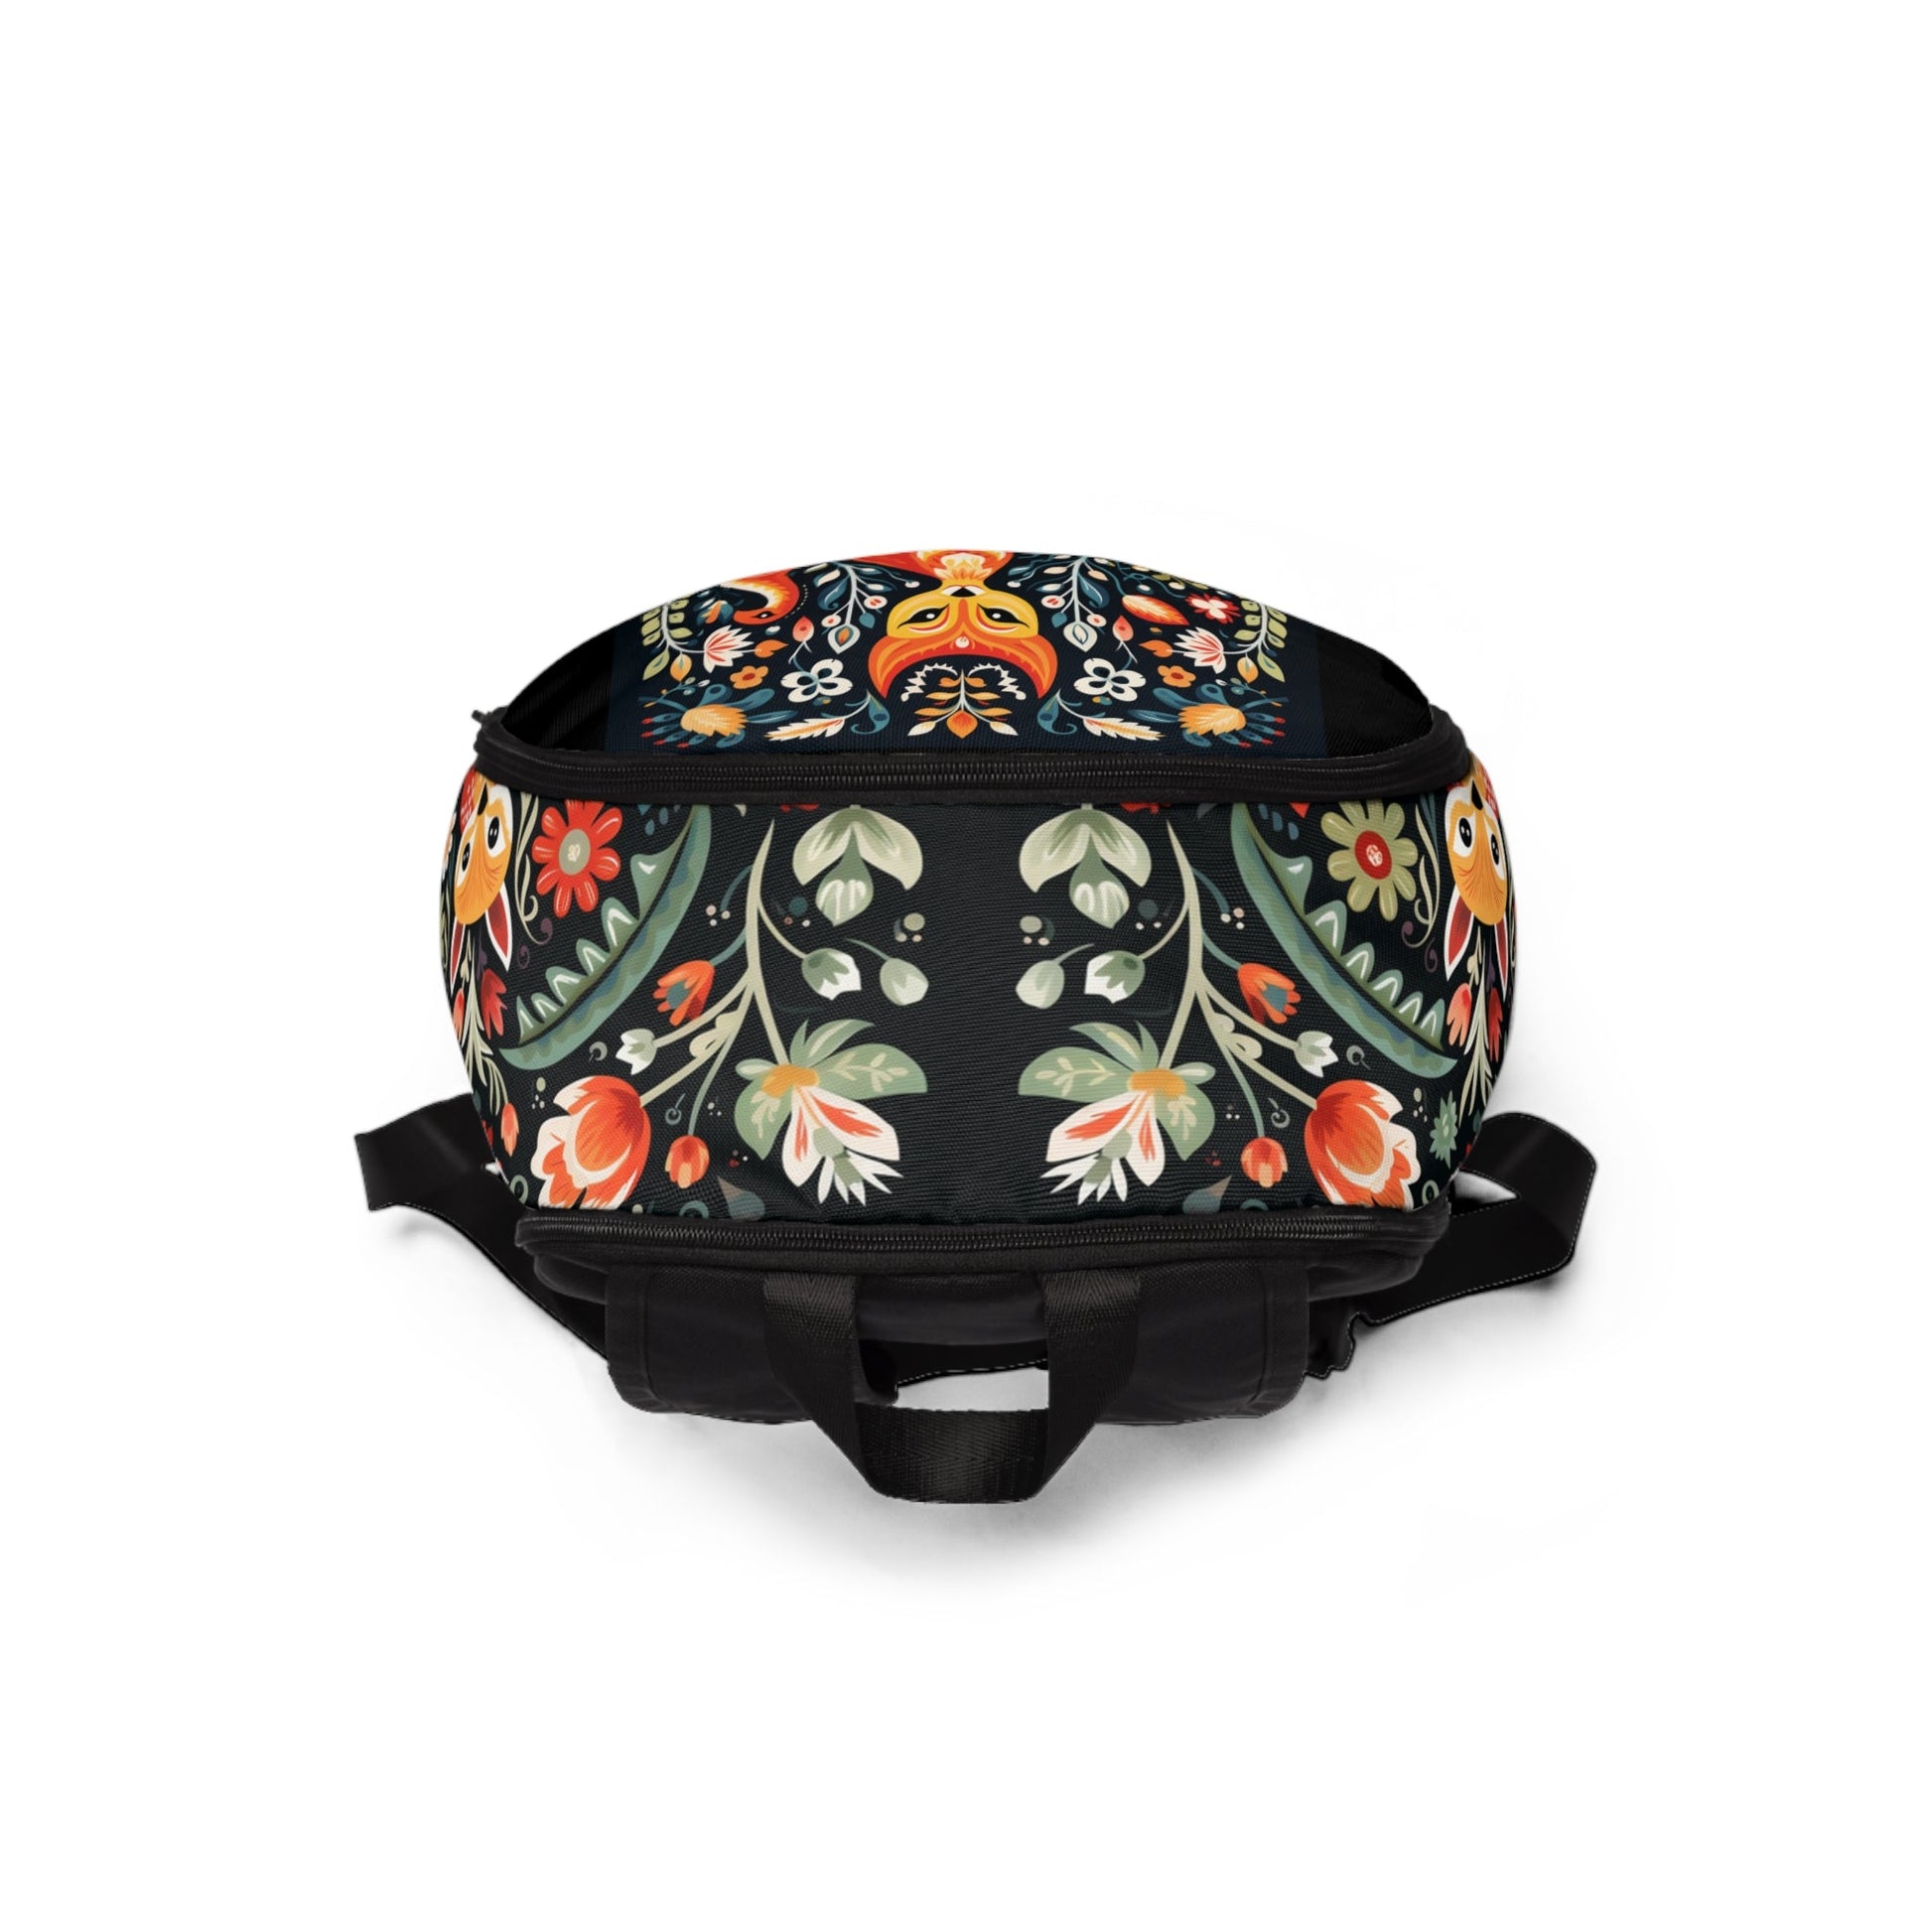 Personalized Scandinavian Folk Art Wildlife Backpack, Fashionable Bookbag - FlooredByArt